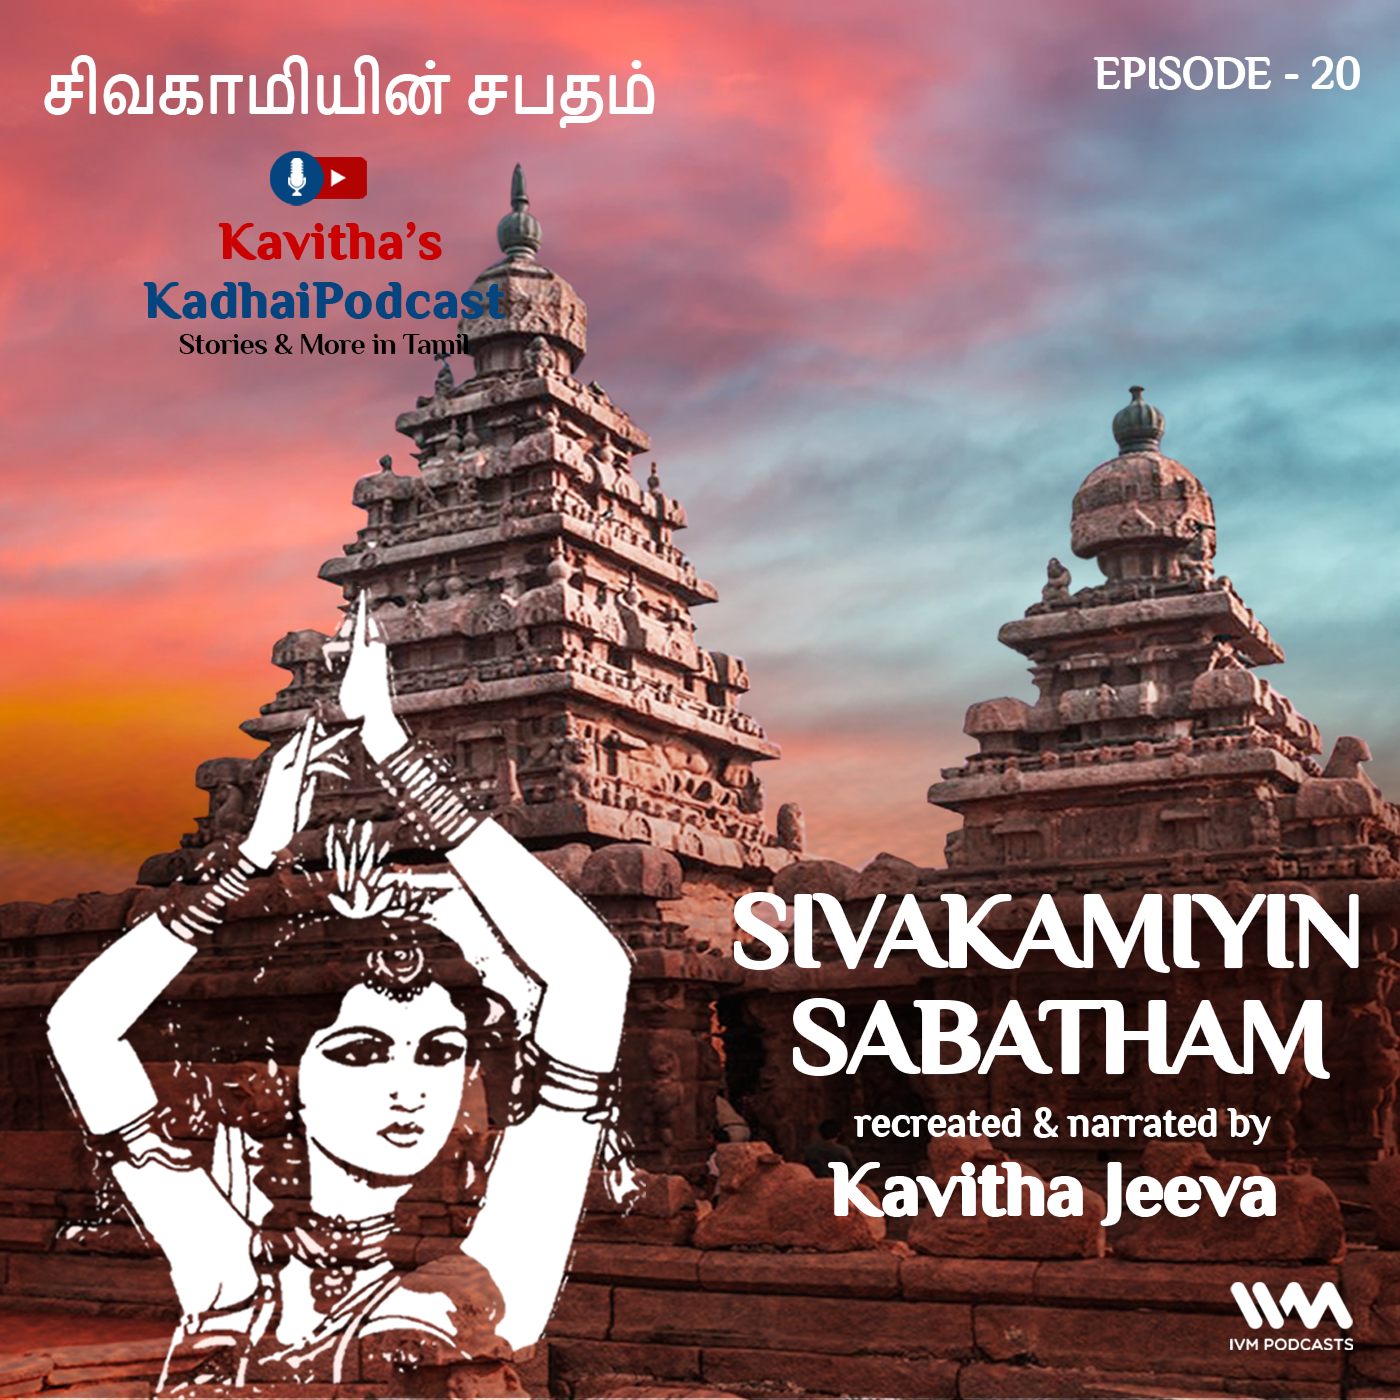 KadhaiPodcast's Sivakamiyin Sabatham - Episode #20